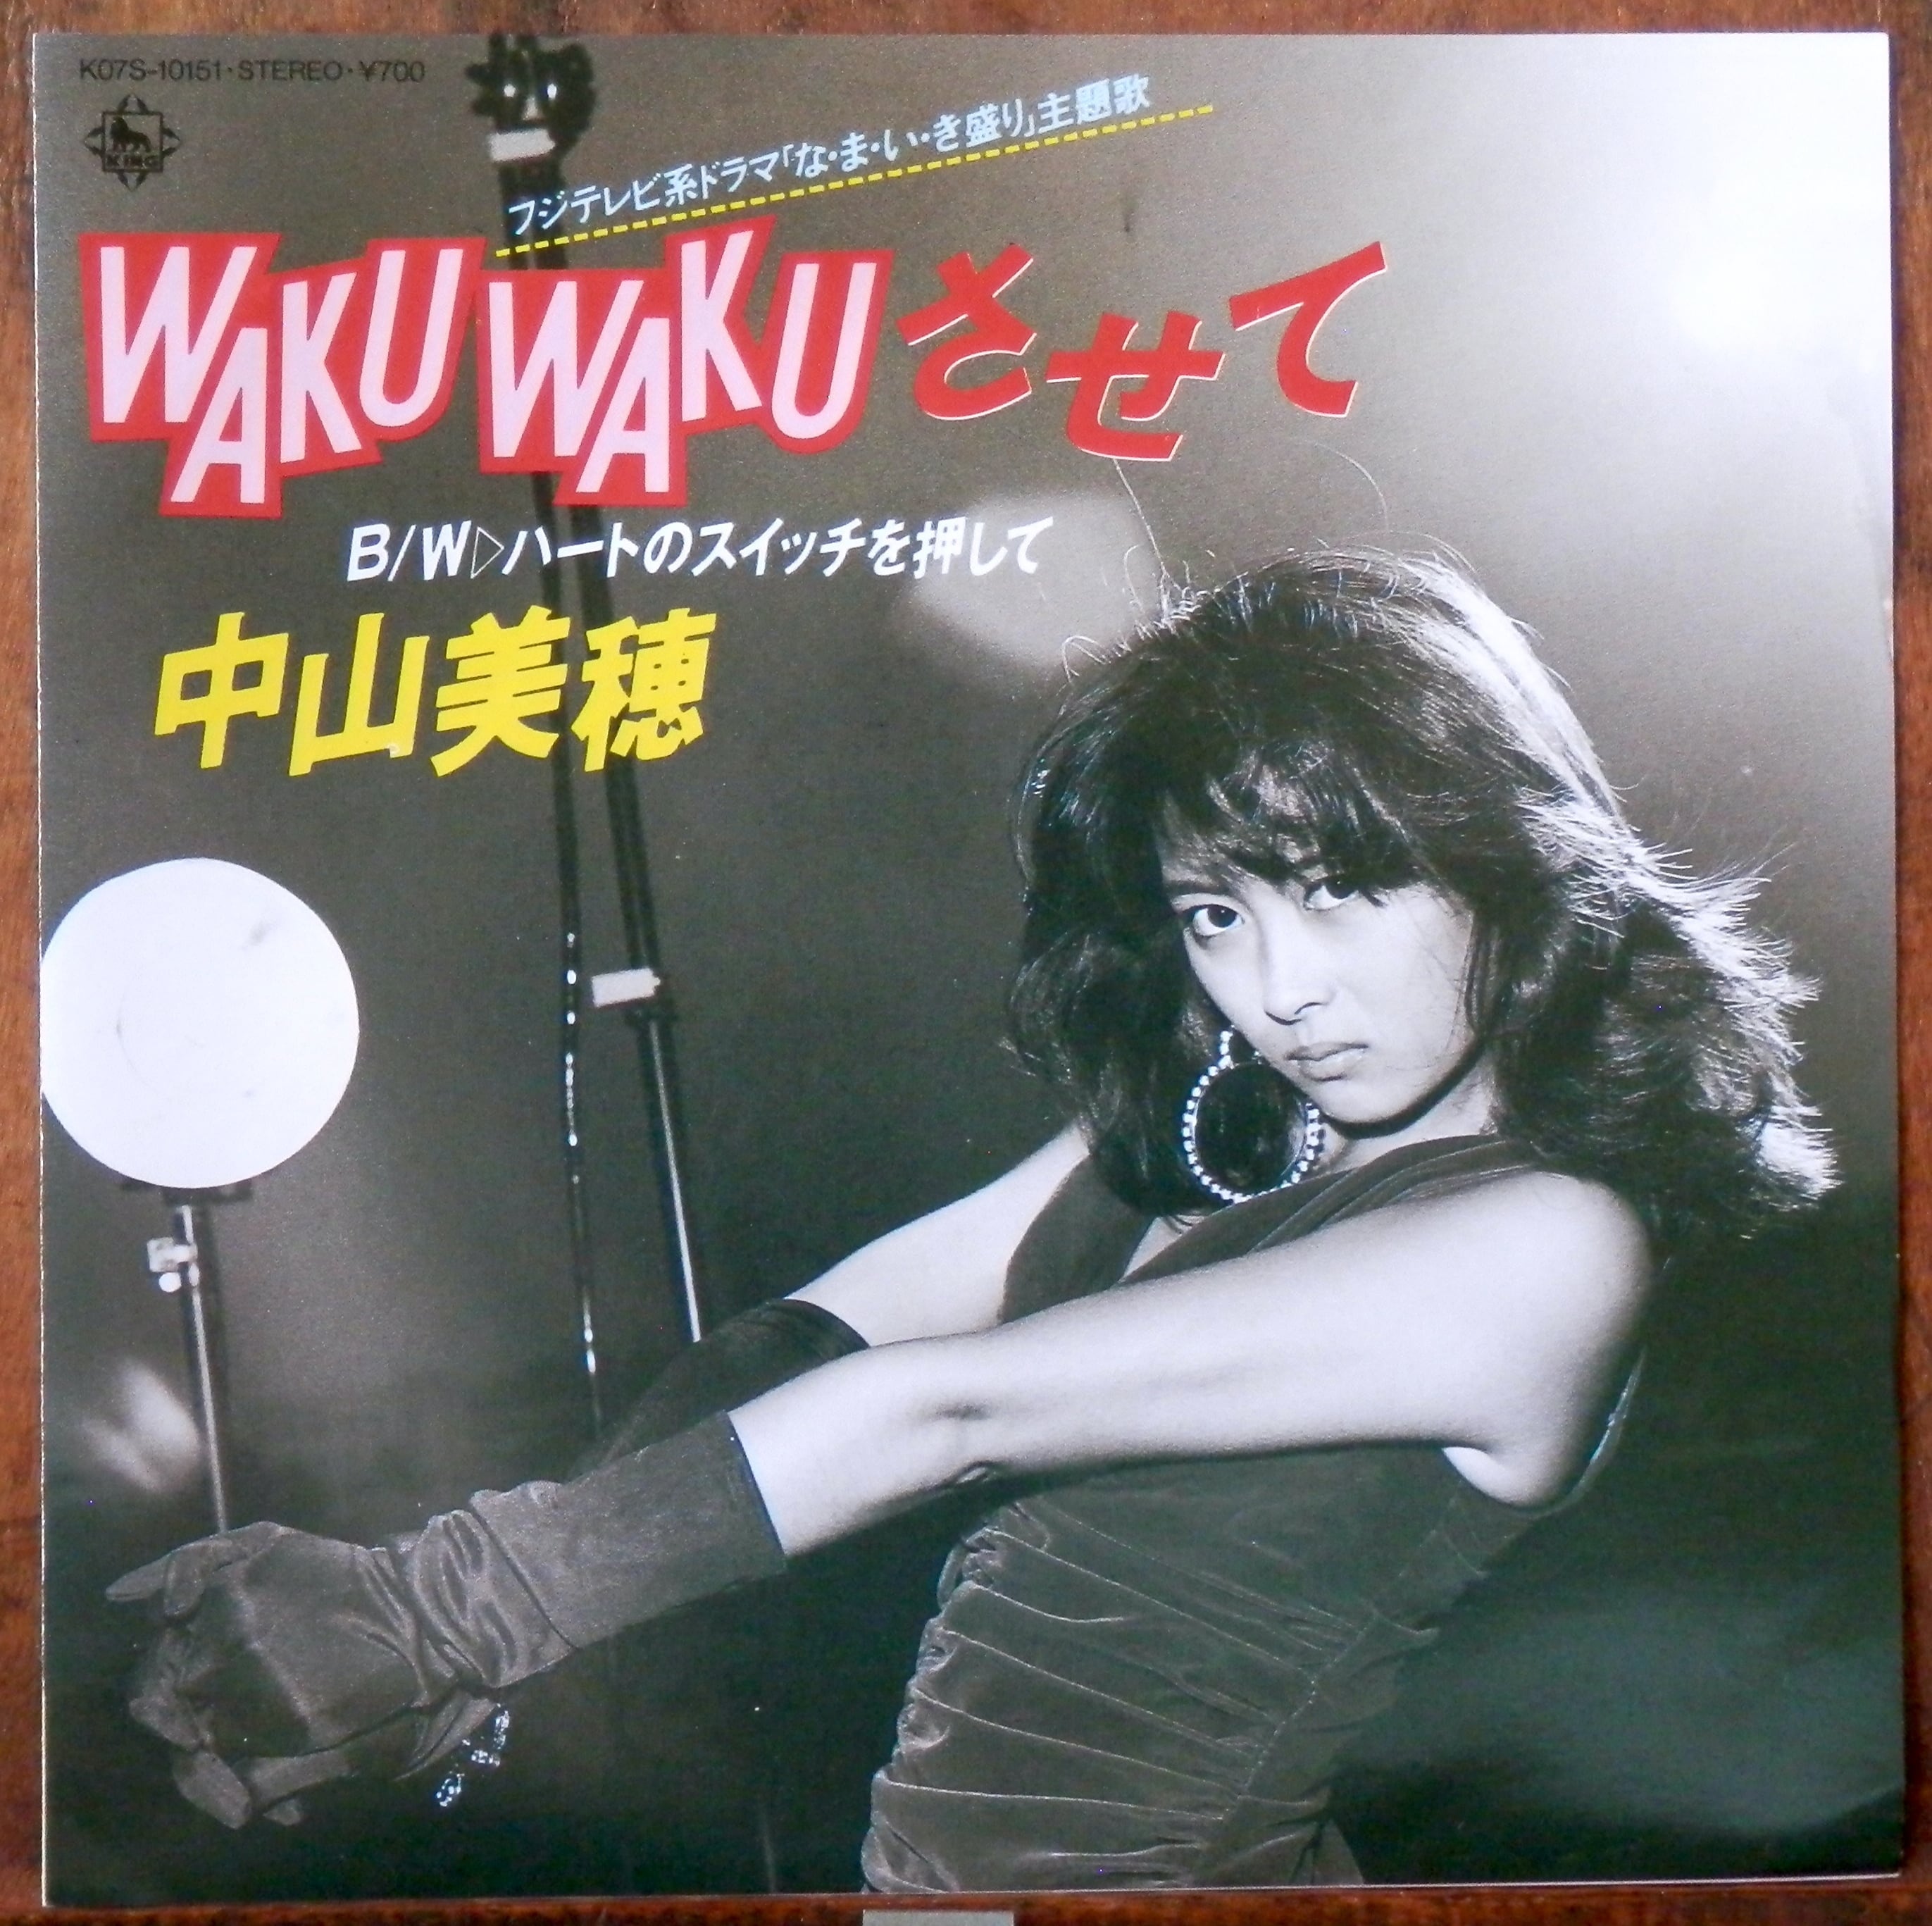 '86【EP】中山美穂 WAKU WAKUさせて 音盤窟レコード